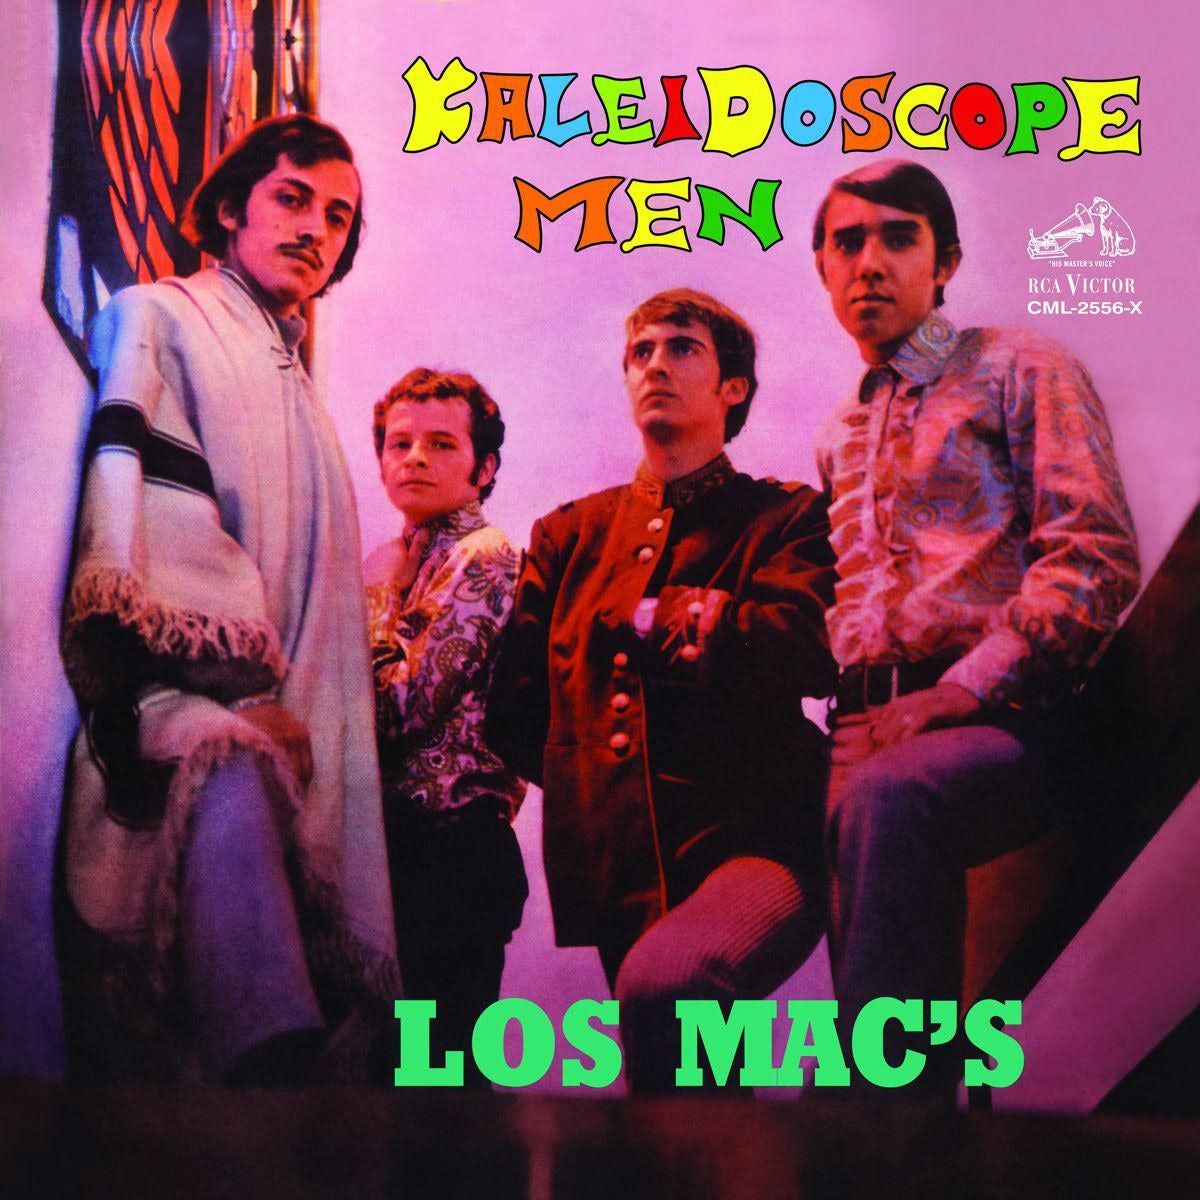 Los Mac's - Kaleidoscope Men LP (Reissue)